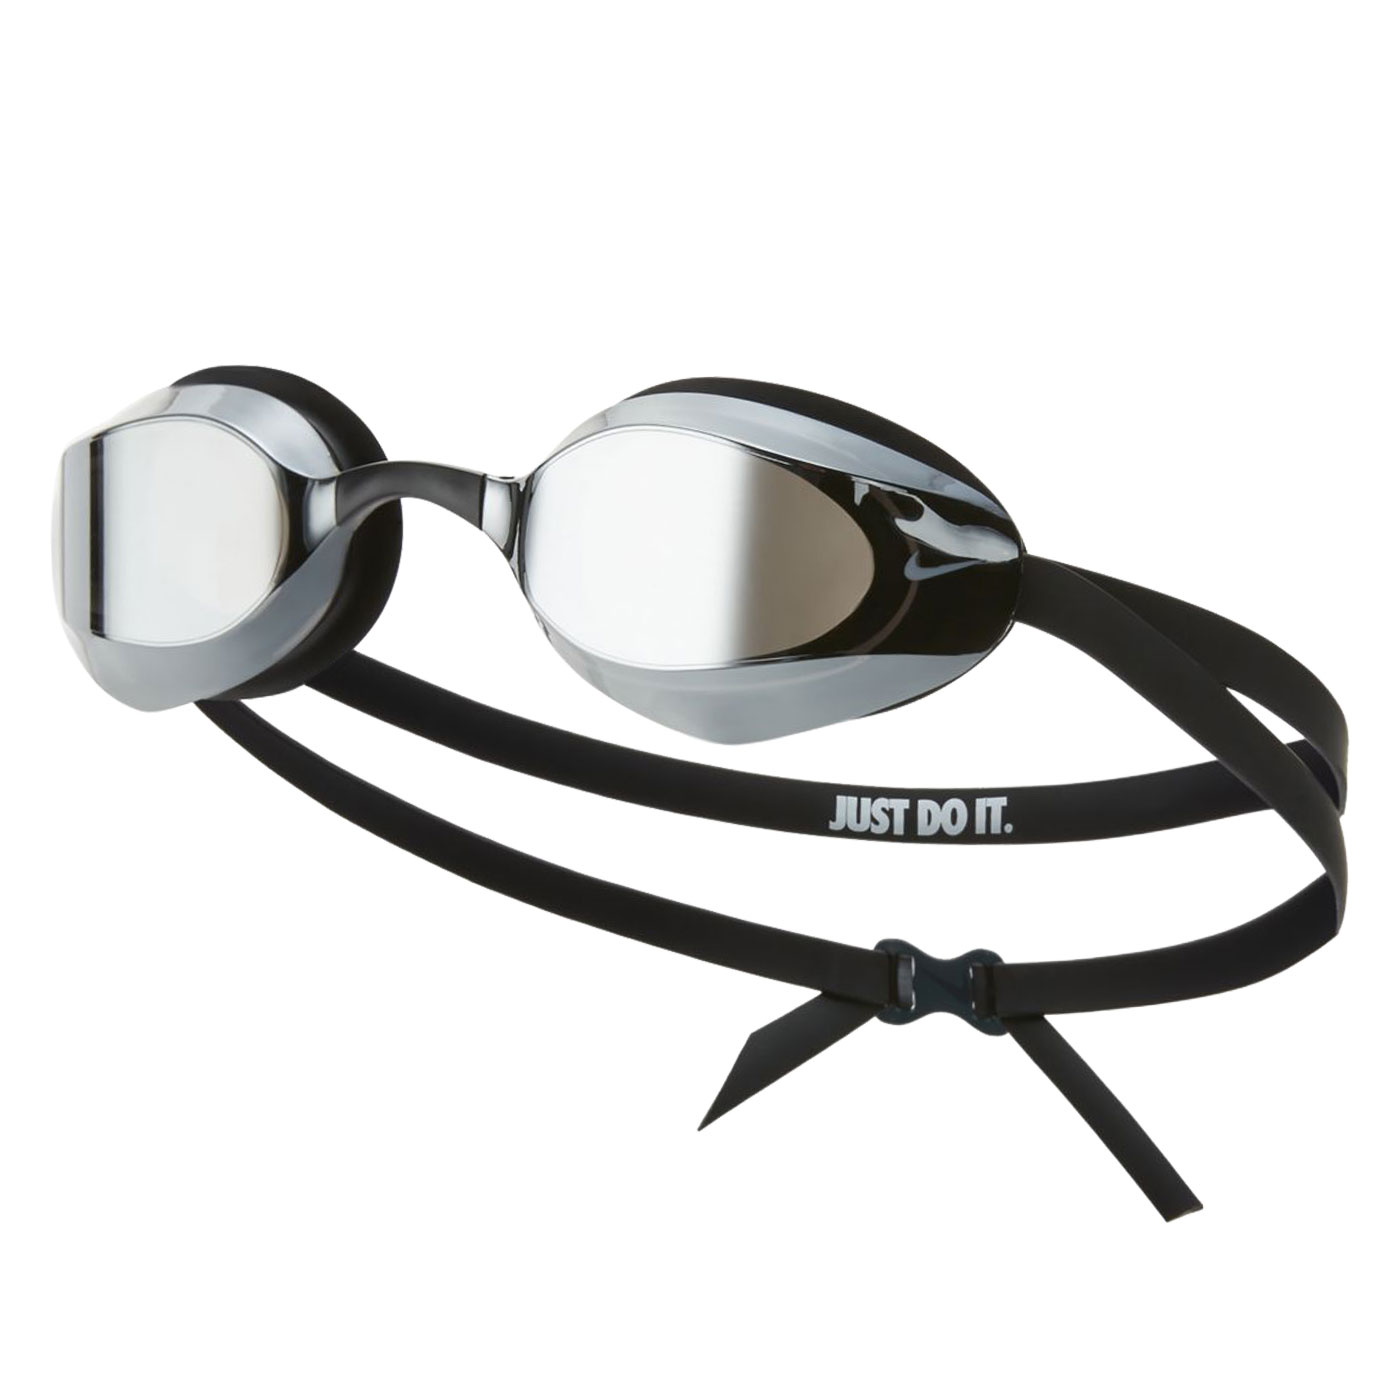 NIKE SWIM 成人專業型鏡面泳鏡 NESSA176-040 - 黑白